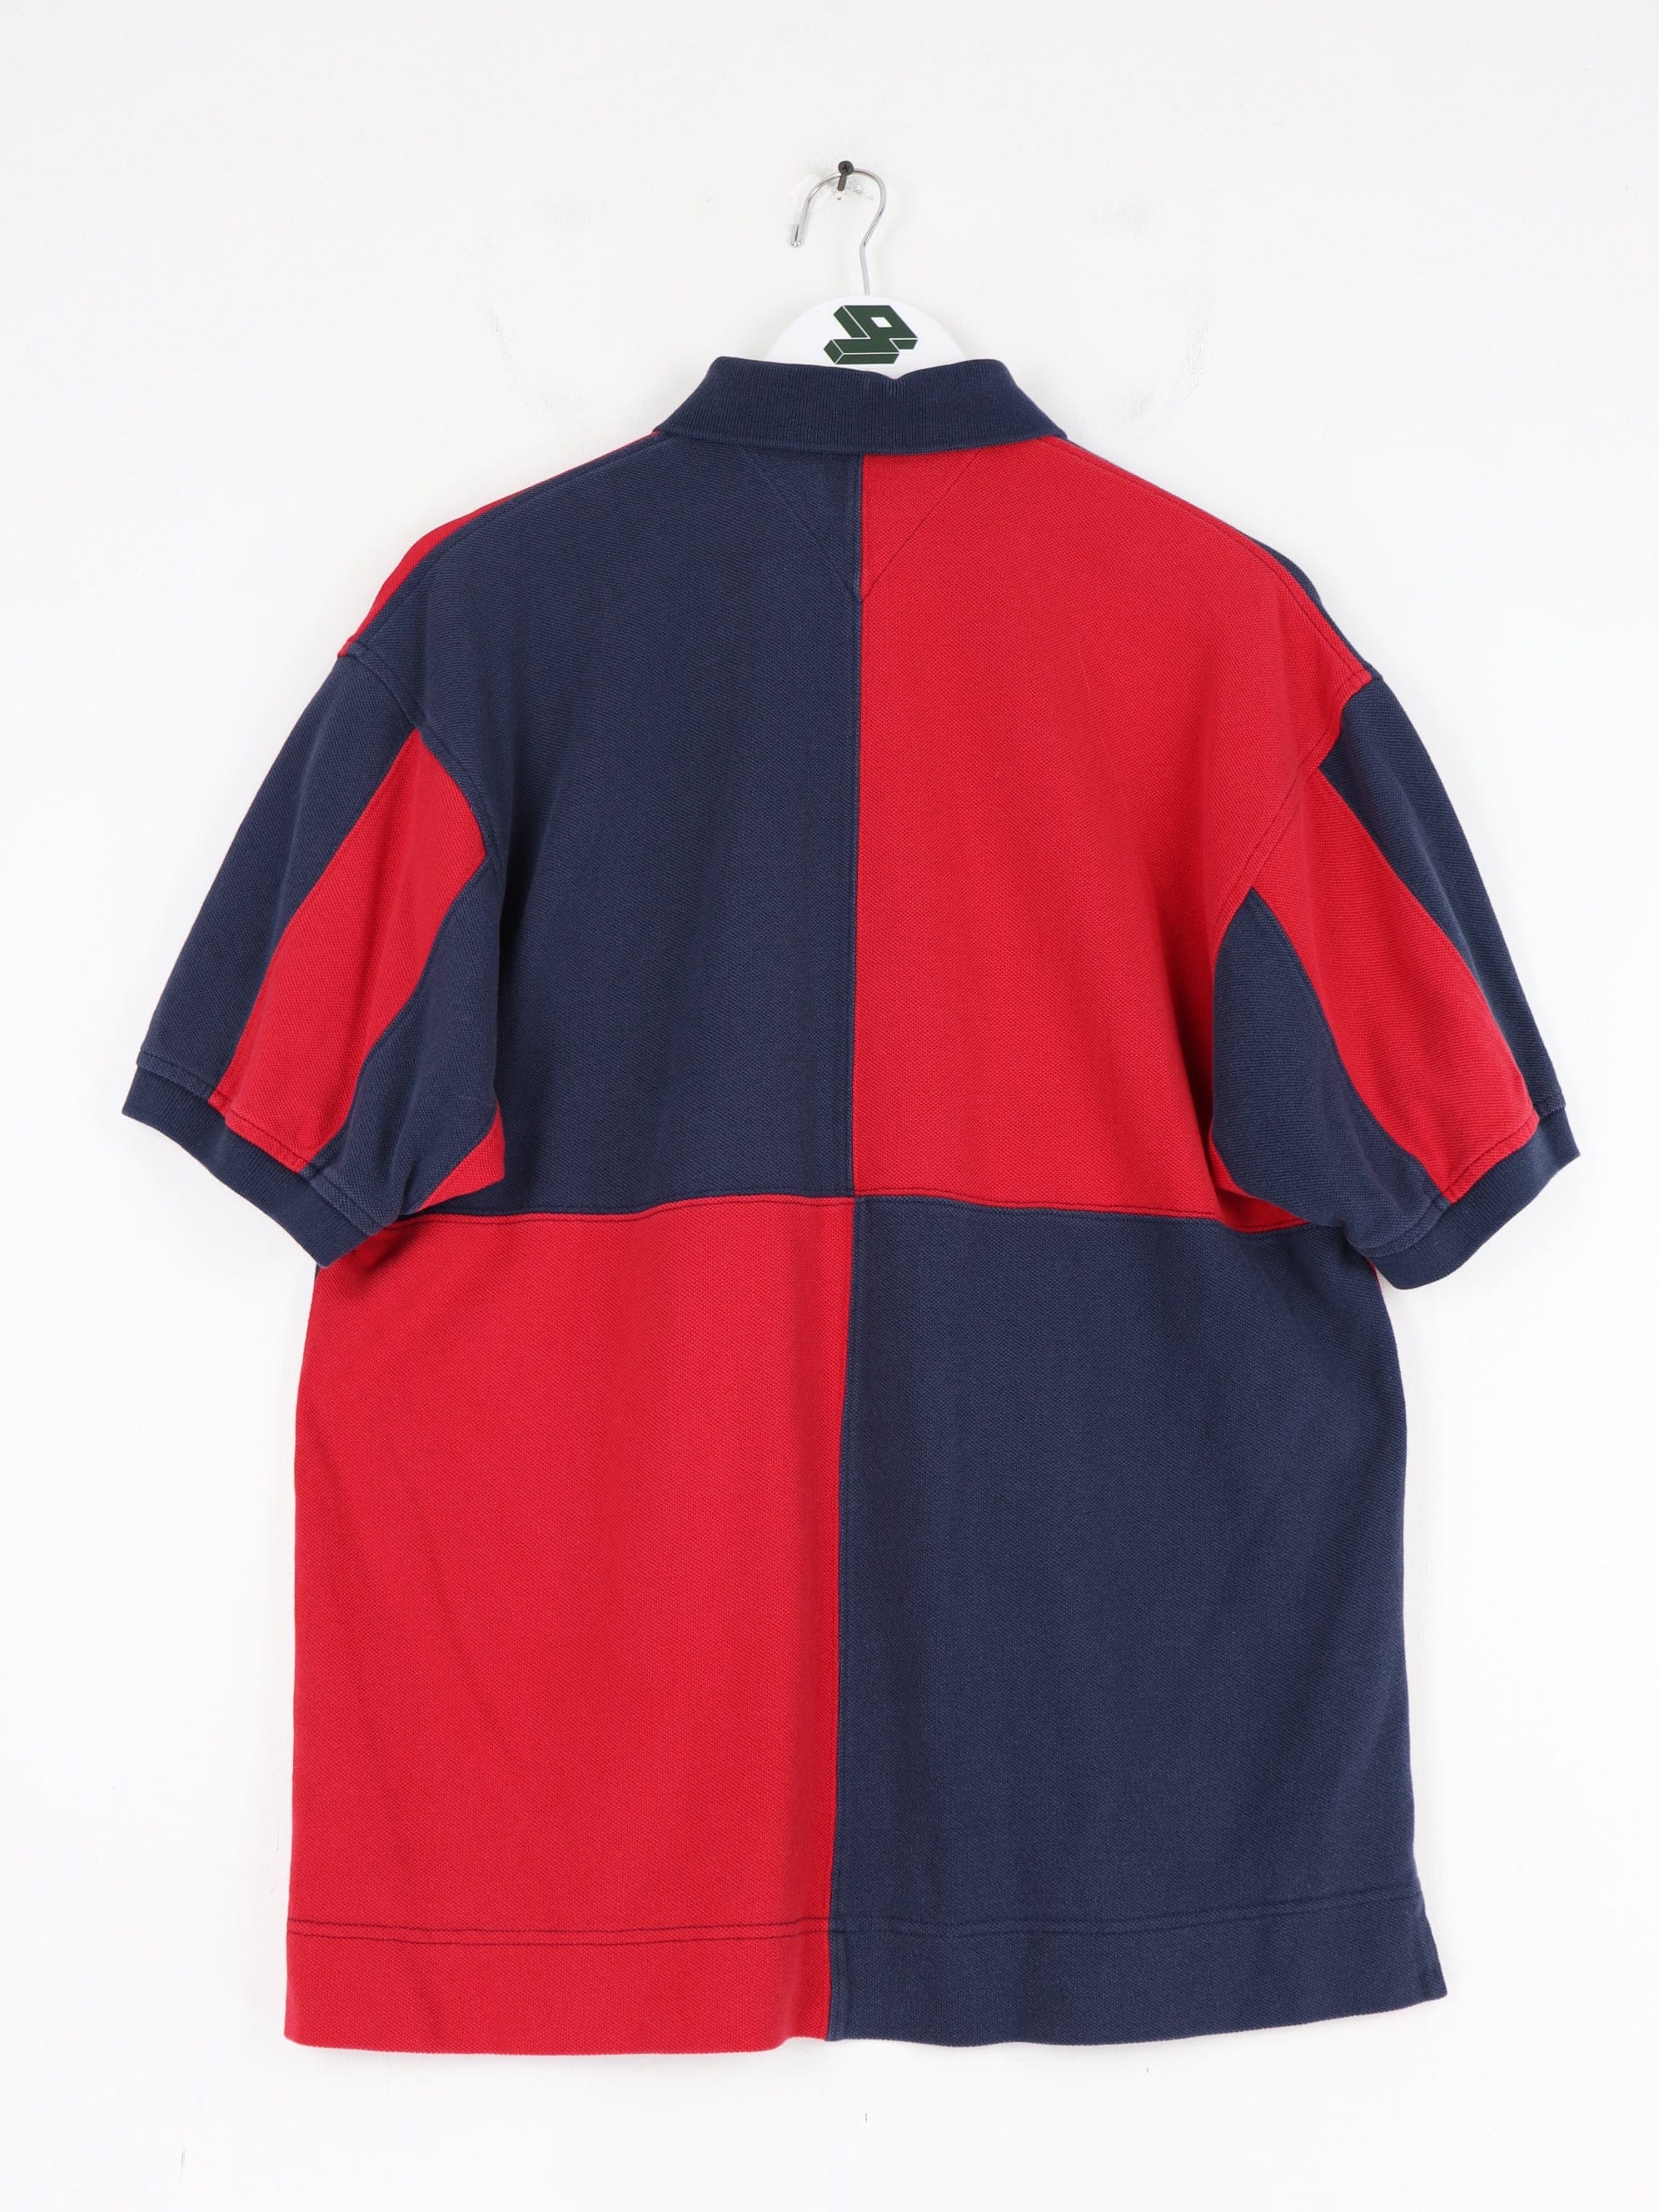 Vintage Tommy Hilfiger Polo Shirt Mens XL Blue Pocket 90s